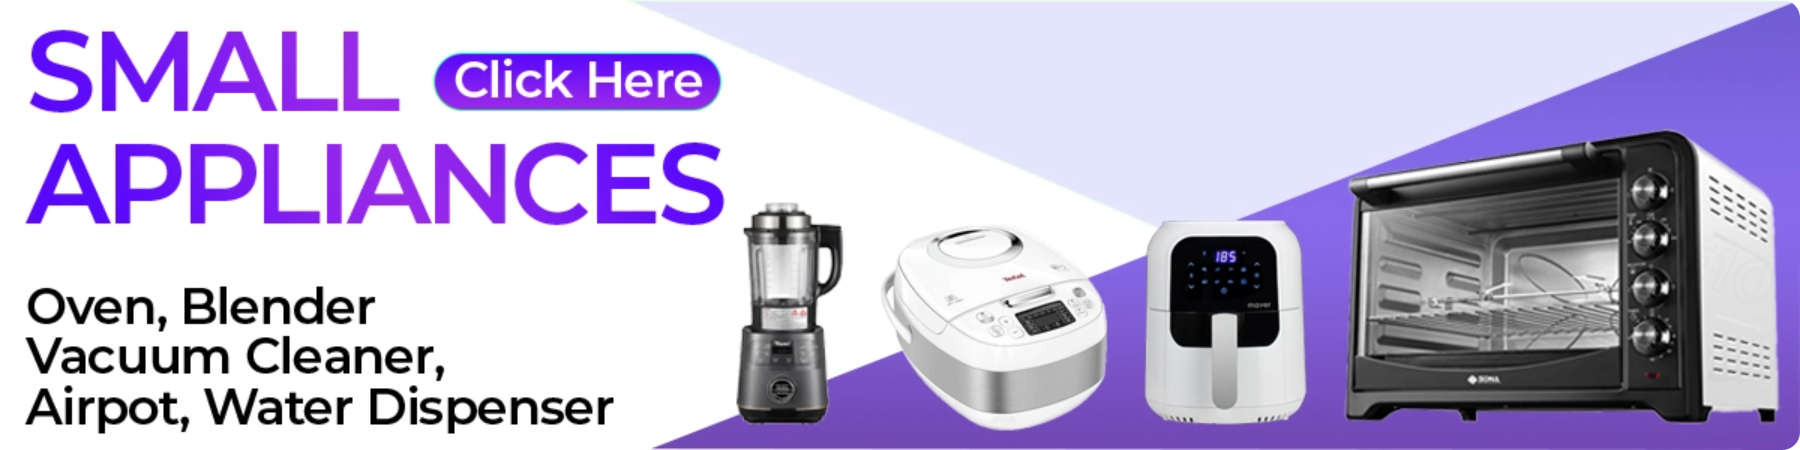 kitchen appliances, small appliances, blender, air fryer, cooking appliances, oven